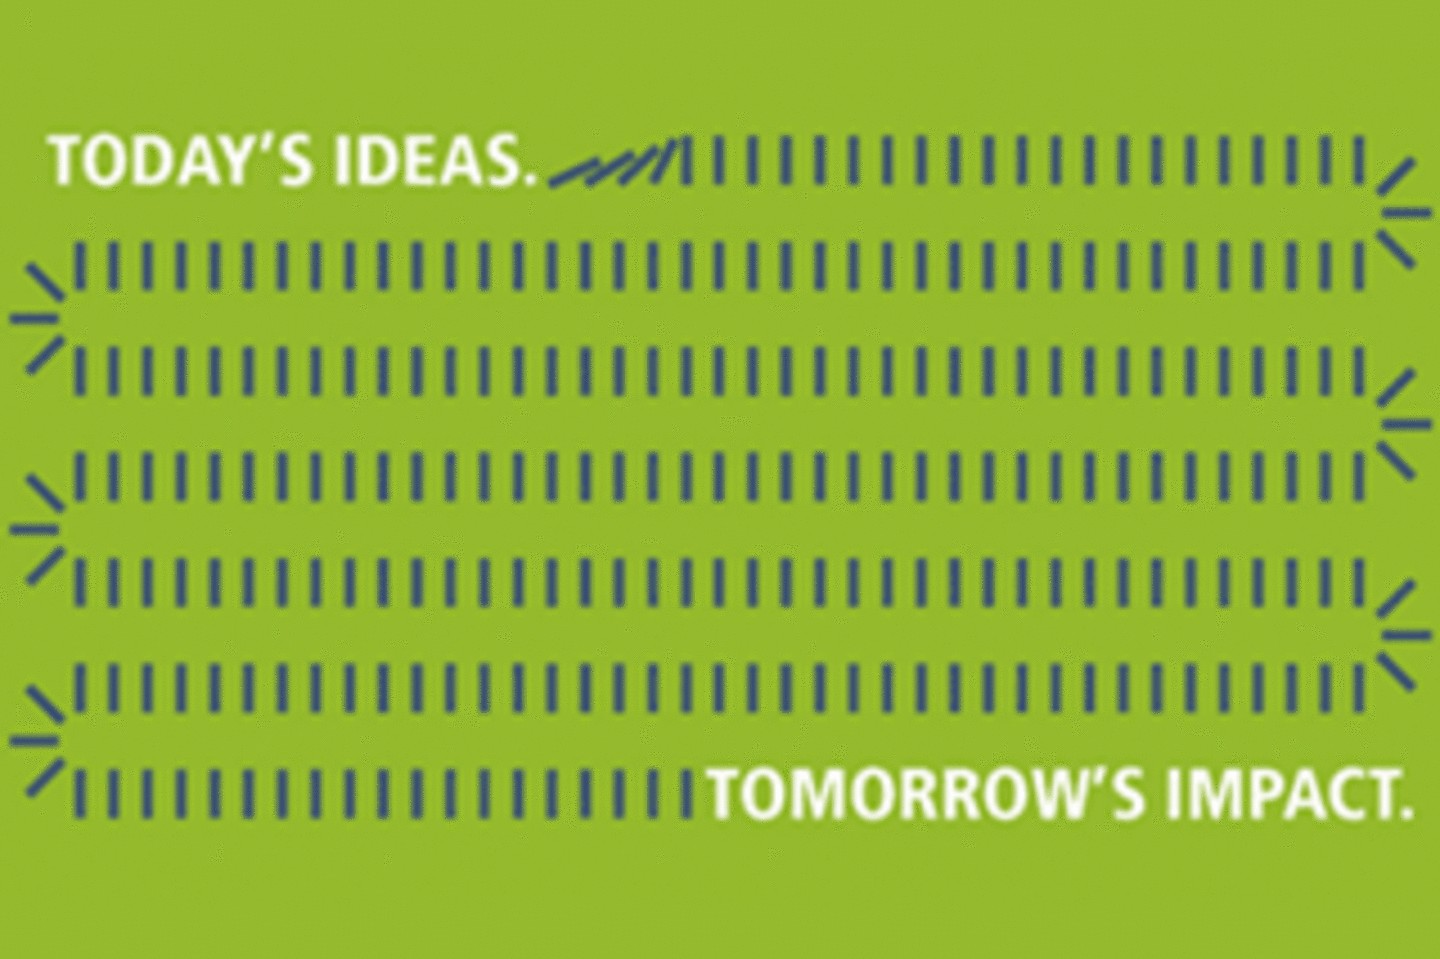 Today's ideas. Tomorrow's impact. in between dominoes